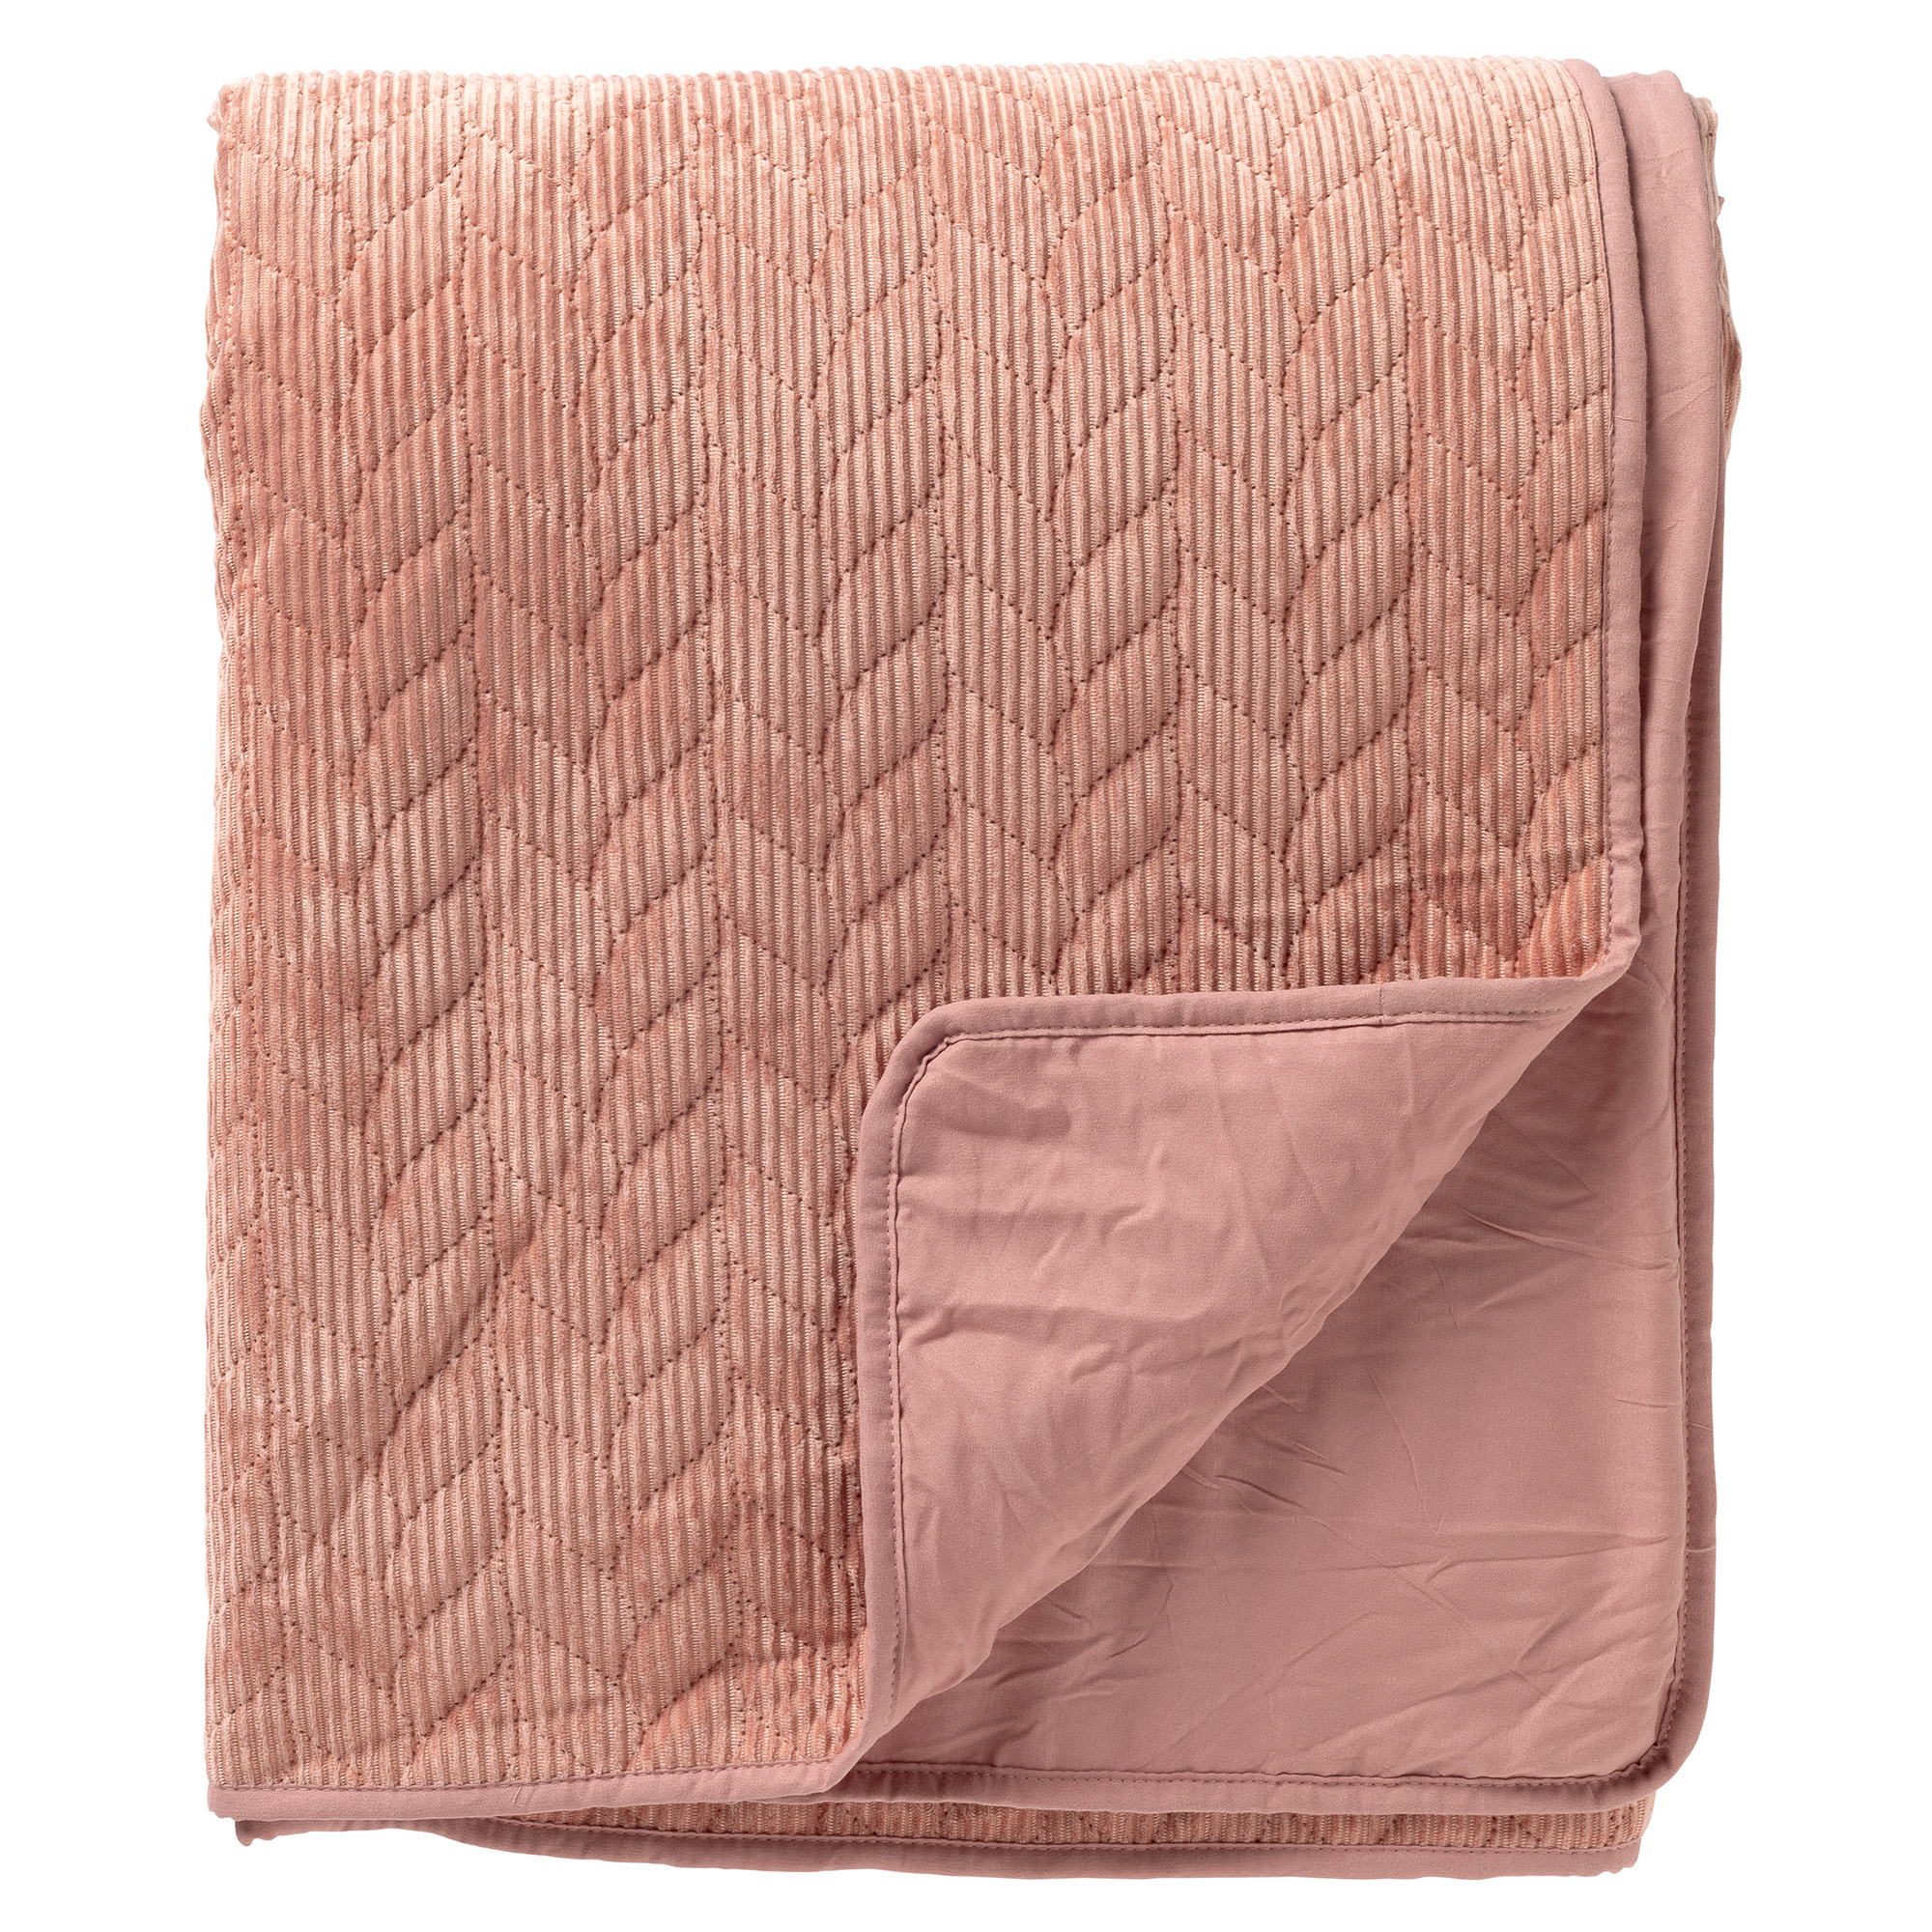 NORALY - Bedsprei 240x260 cm - Cork - roze